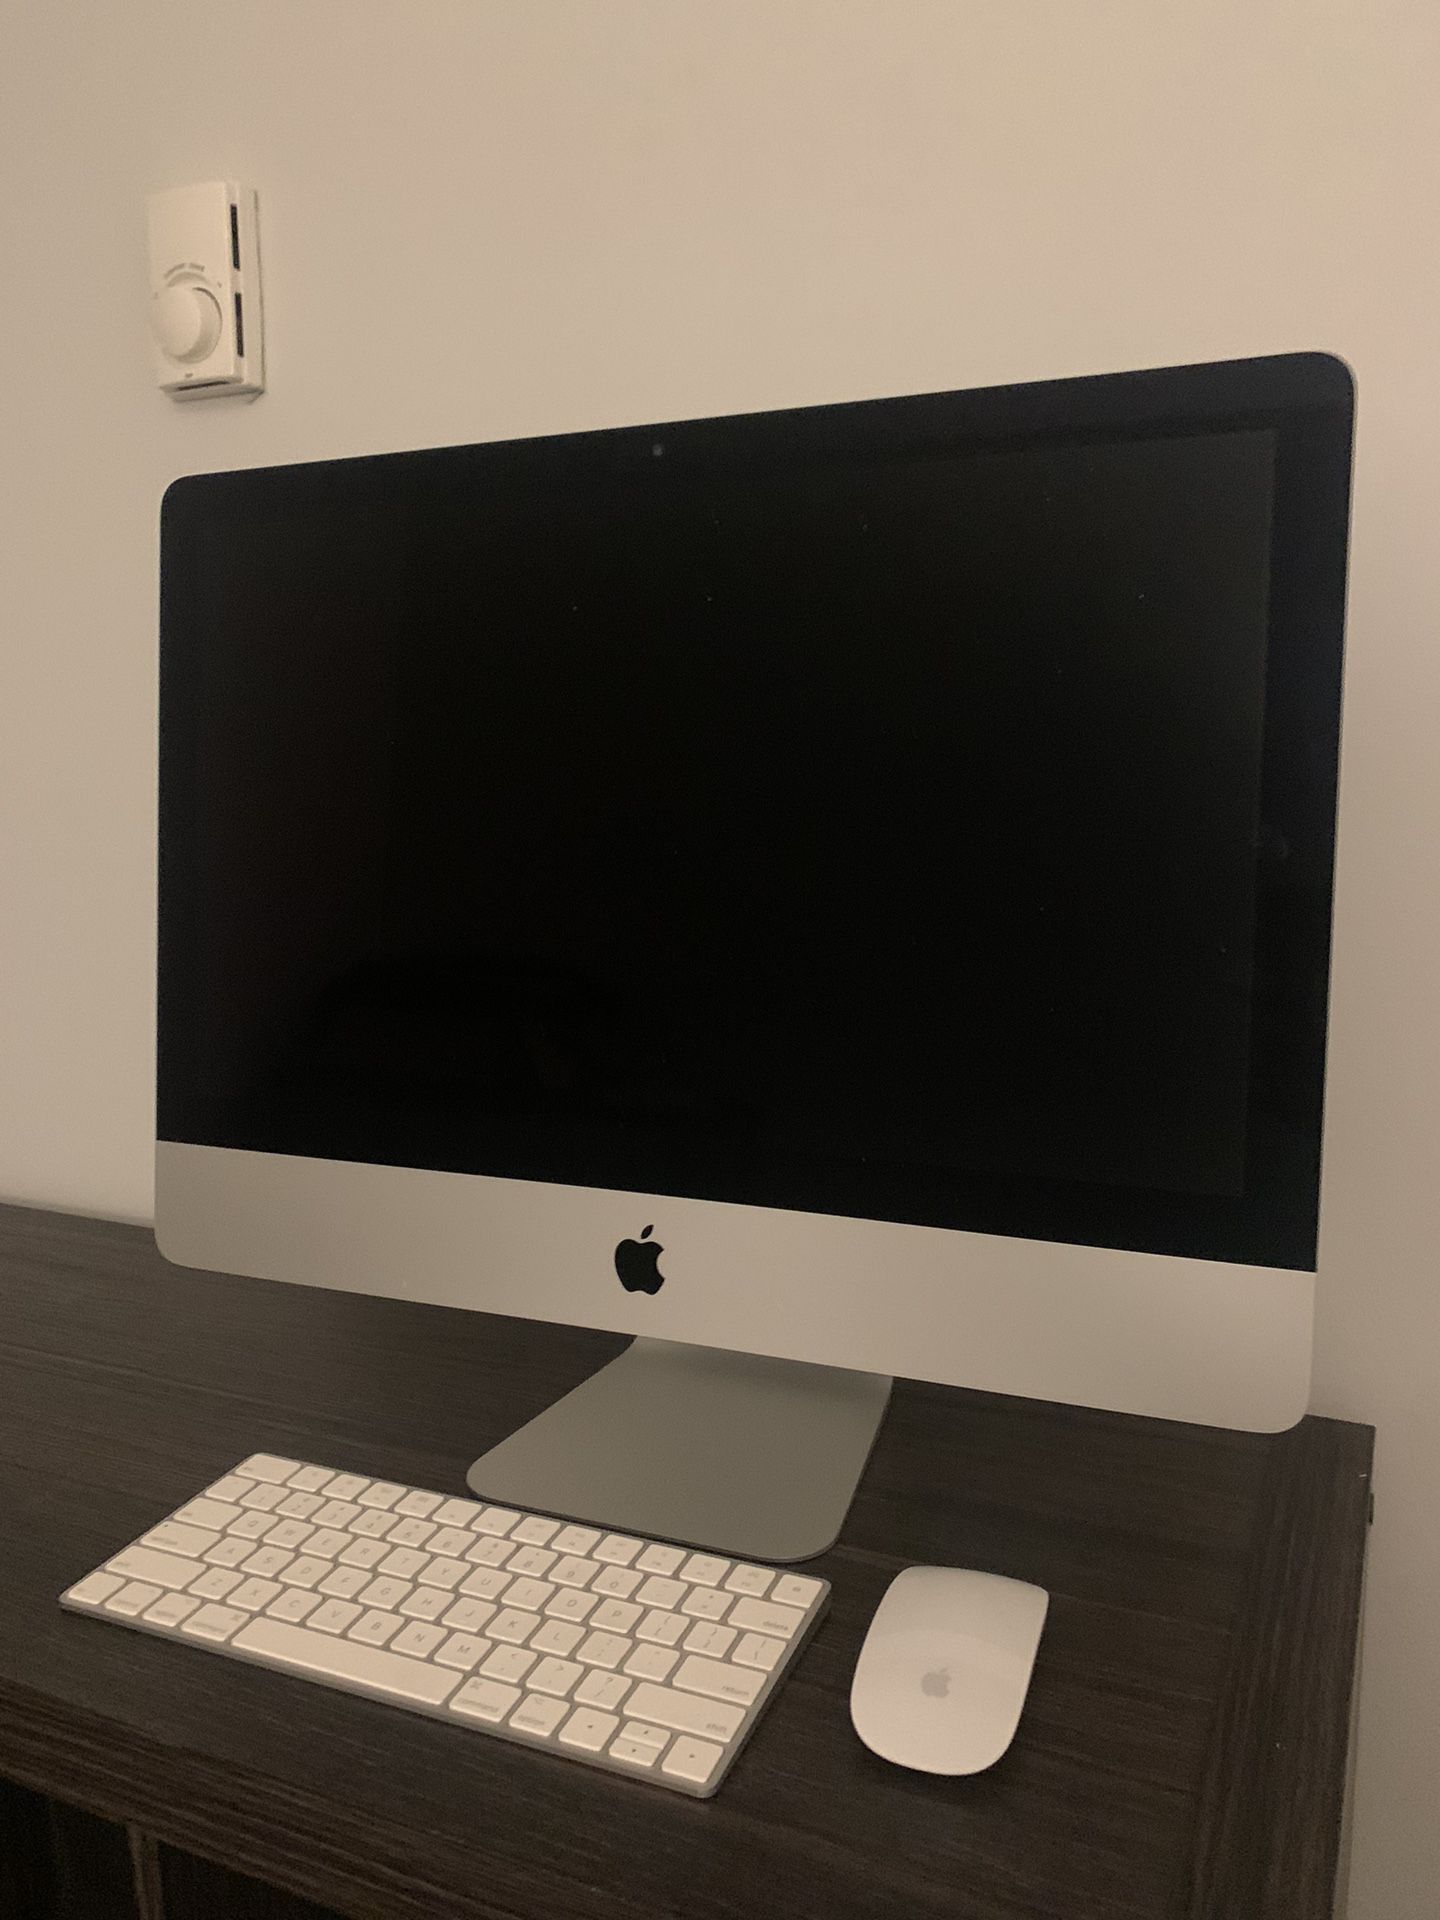 iMac with Magic Keyboard, Mouse